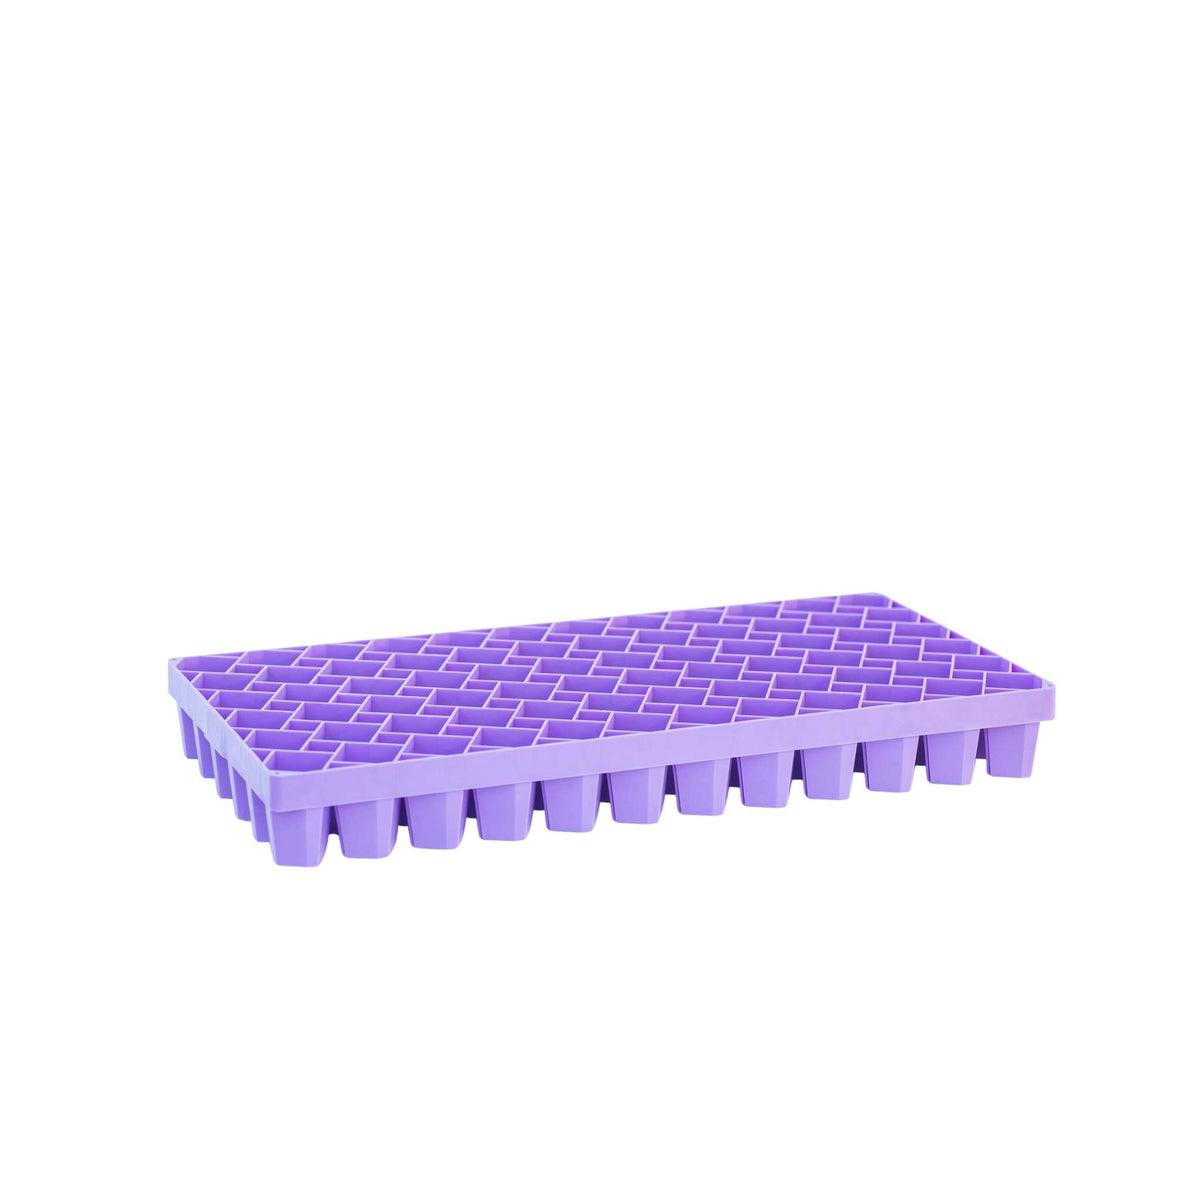 Small Parts Trays - Rectangular Cavity